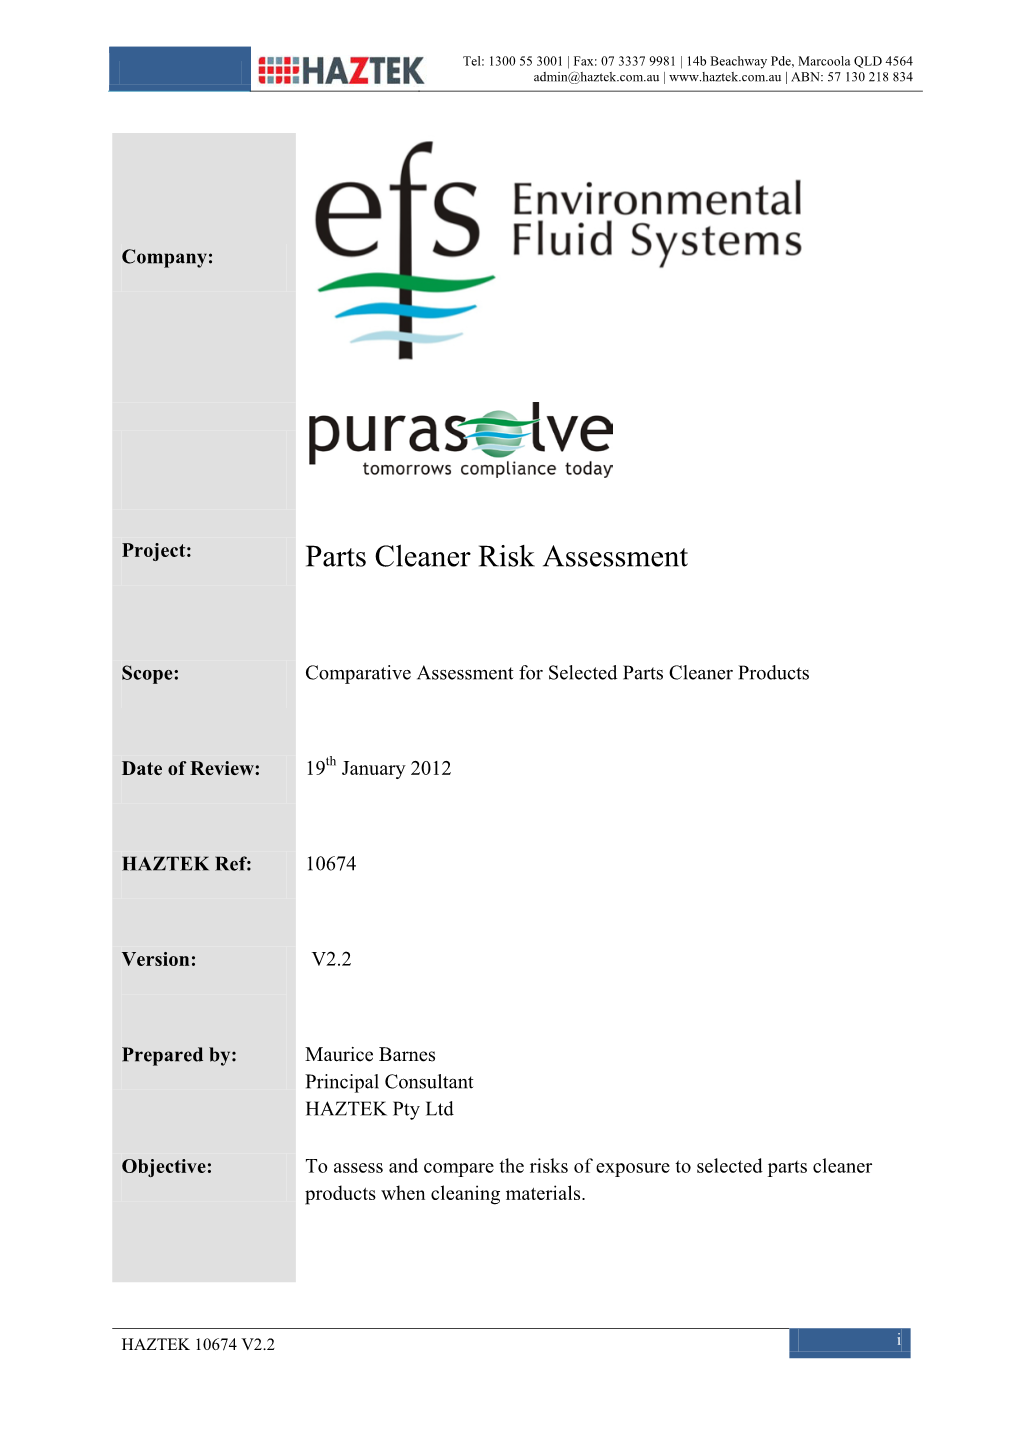 Parts Cleaner Risk Assessment